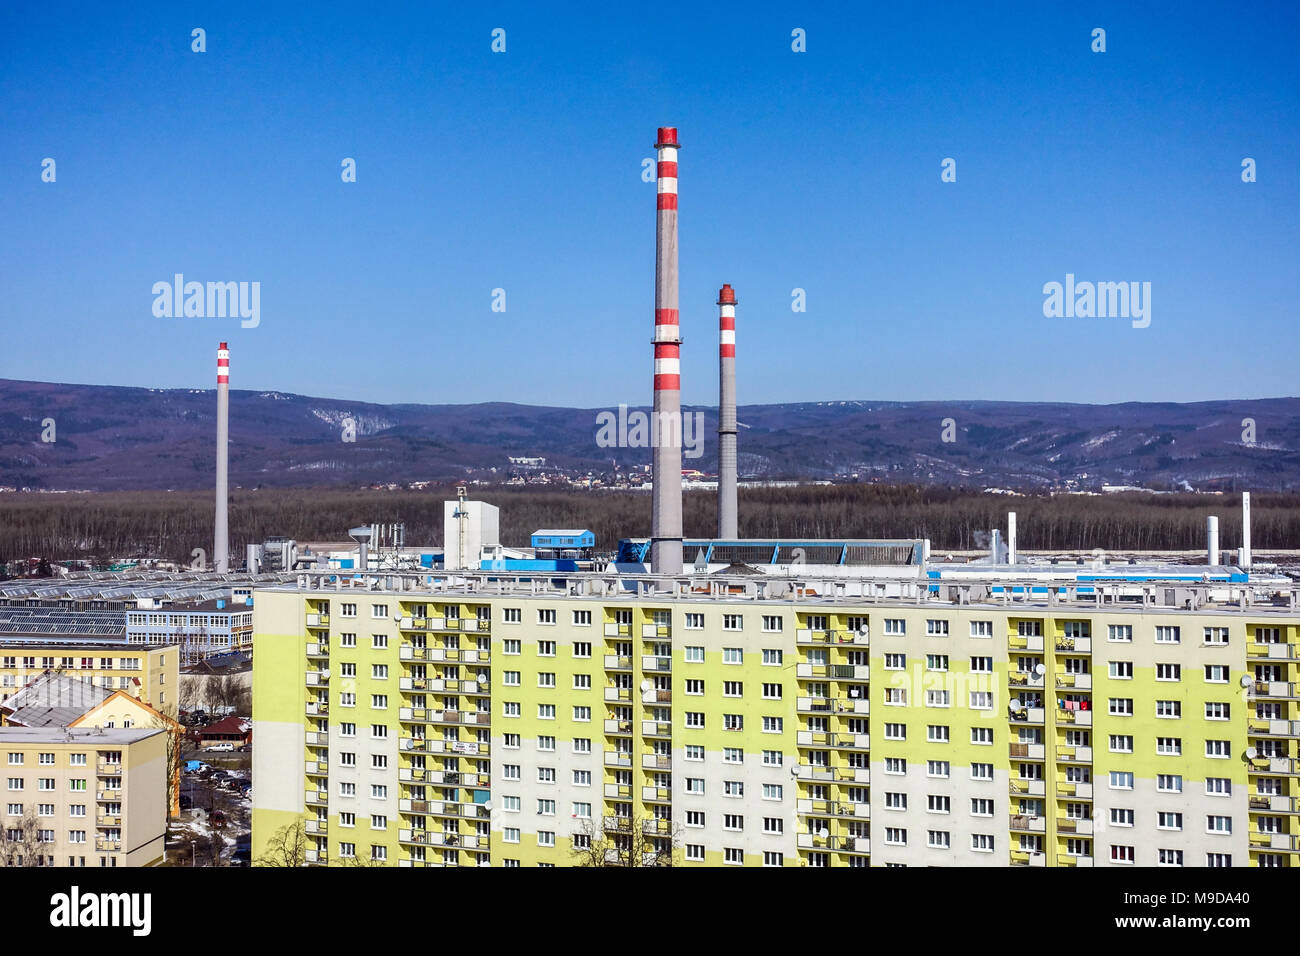 Urban landscape of panel housing estate with chimneys, Teplice, Czech Republic Stock Photo